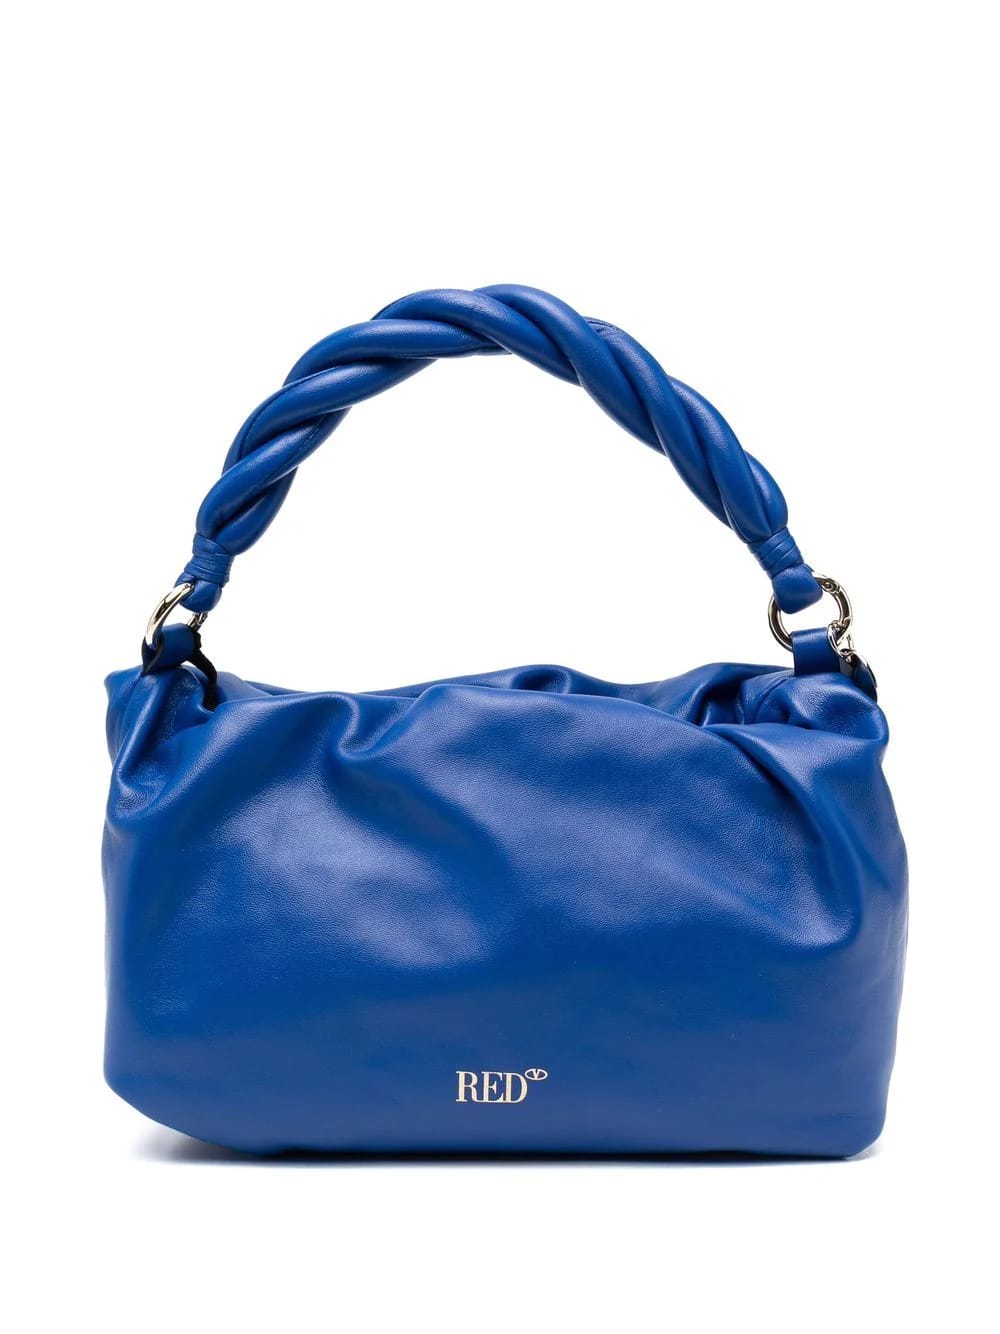 RED Valentino Royal Blue Leather Handbag With Logo